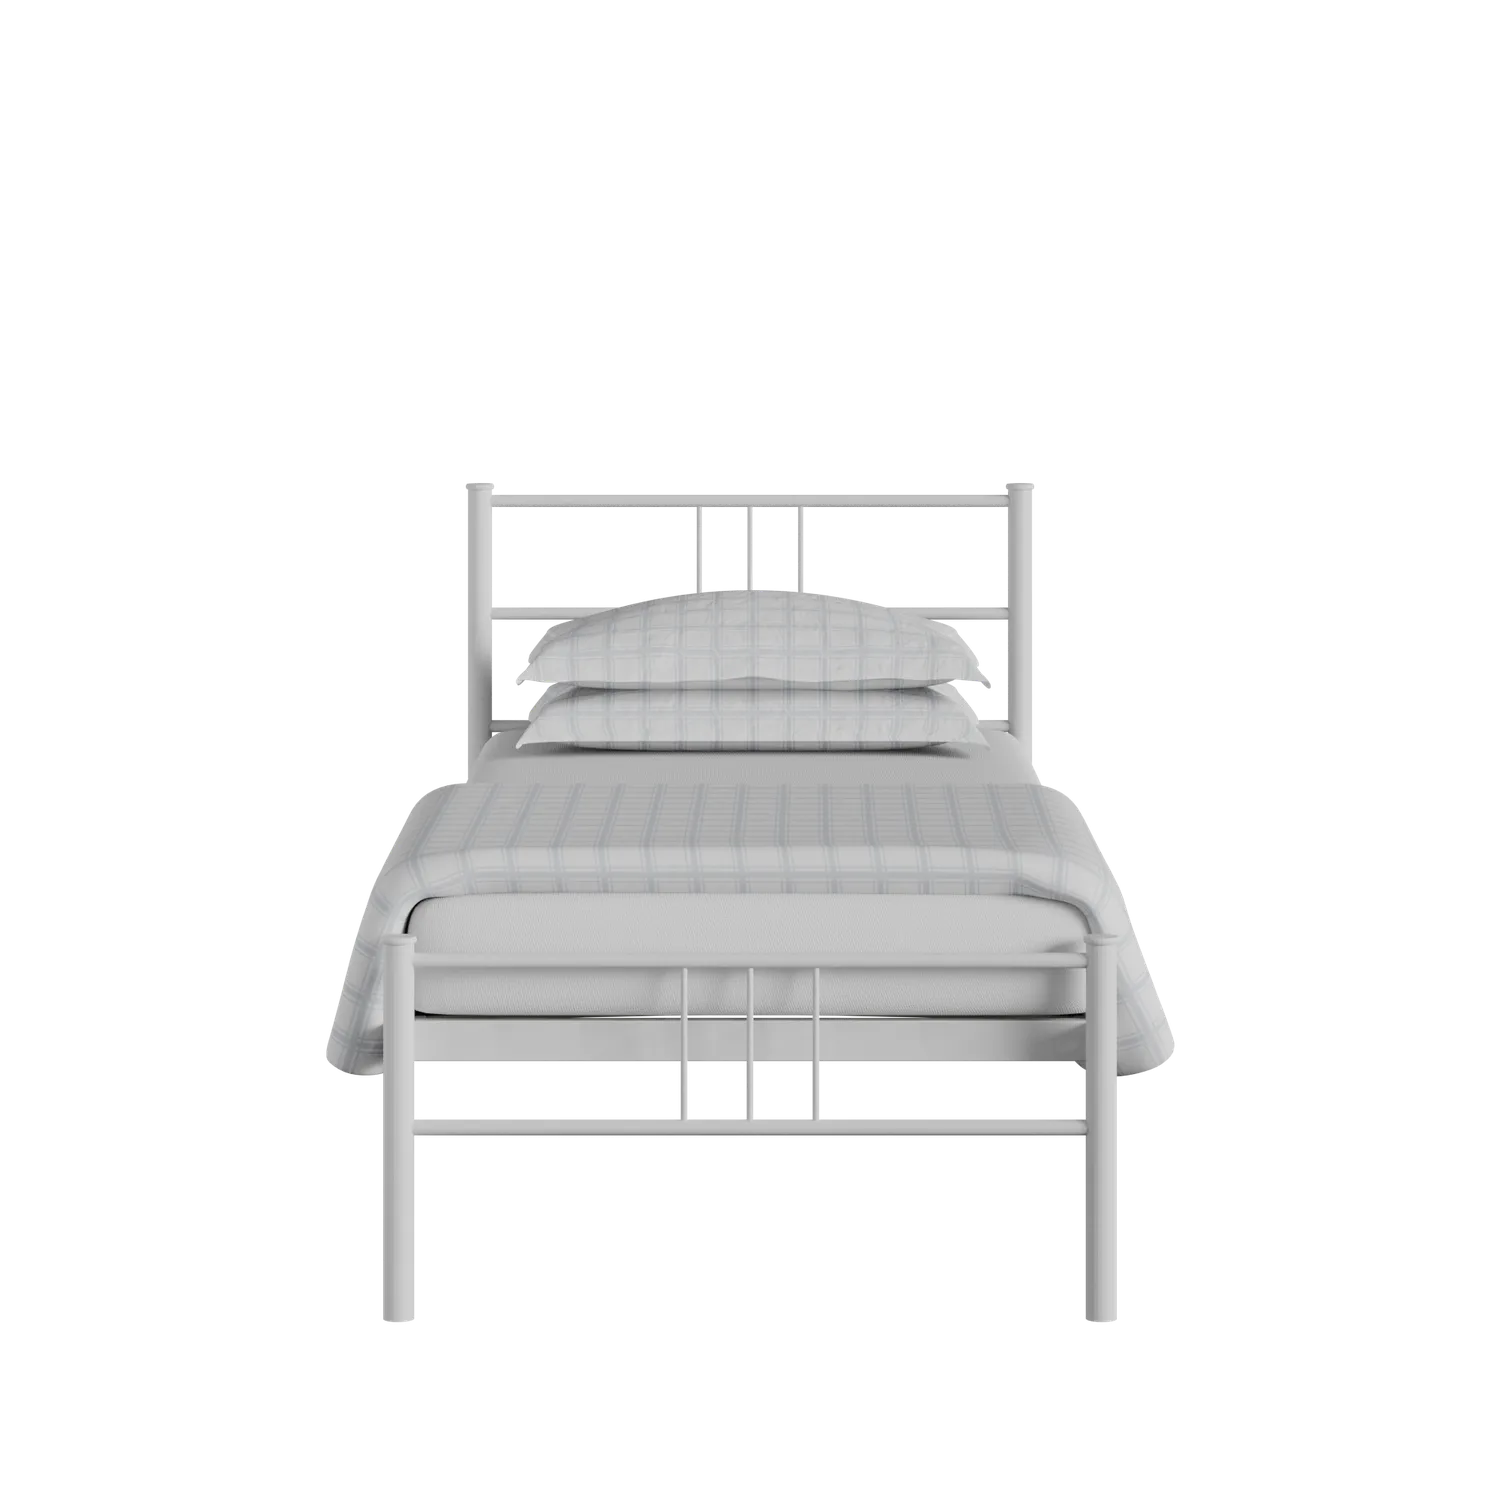 Mortlake iron/metal single bed in white